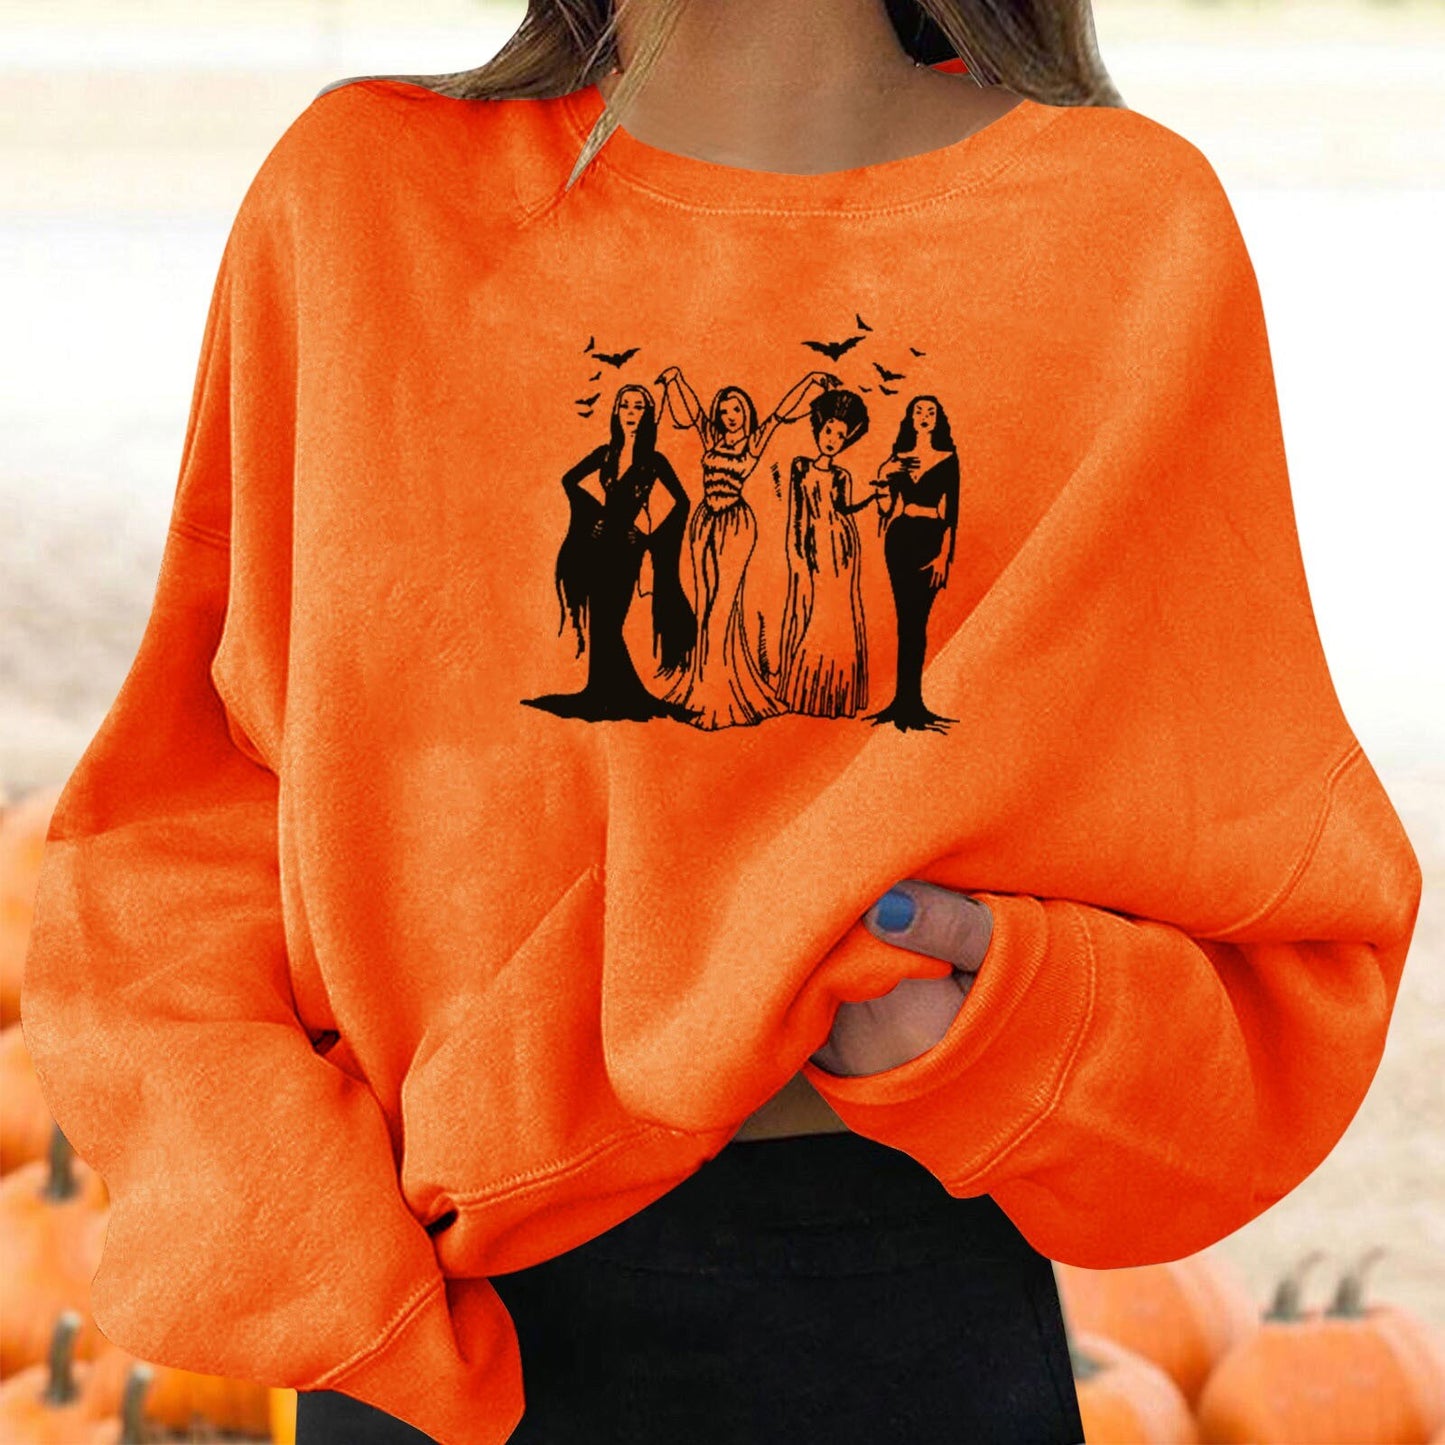 Graphic Pullover Sweatshirt -Women’s